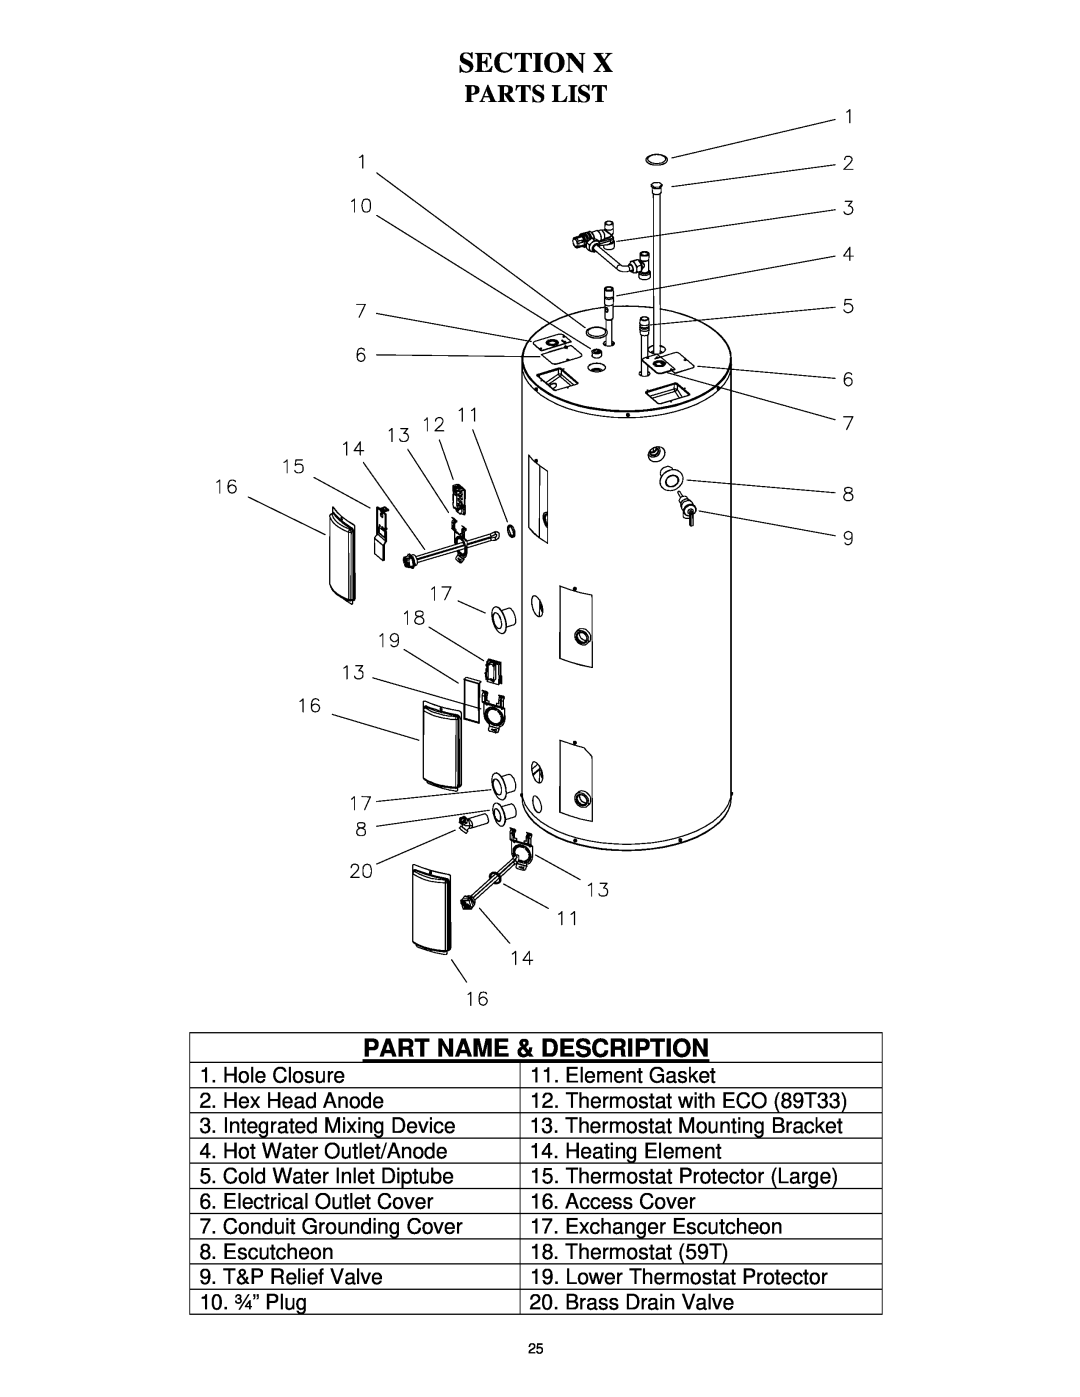 Bradford-White Corp Solar Water Heater manual Section, Parts List, Part Name & Description 